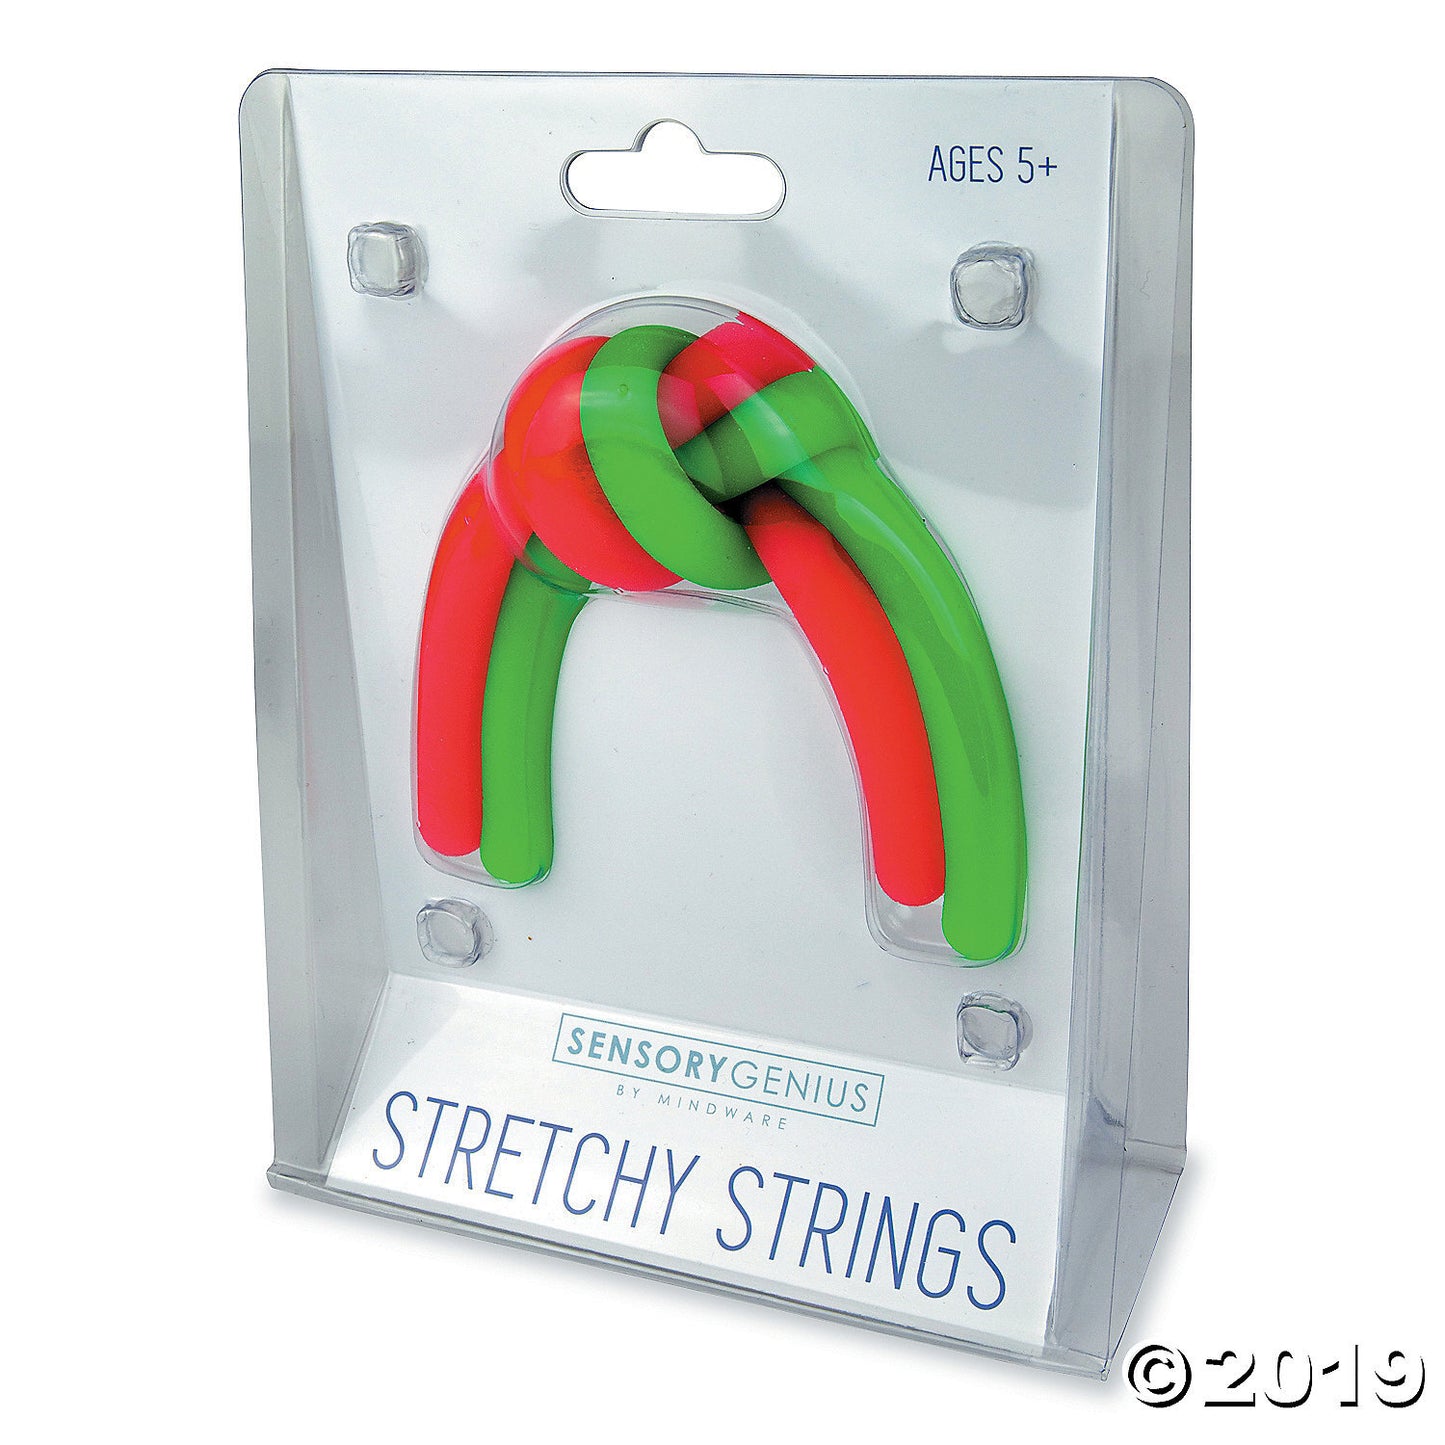 Stretchy Strings Sensory Toy